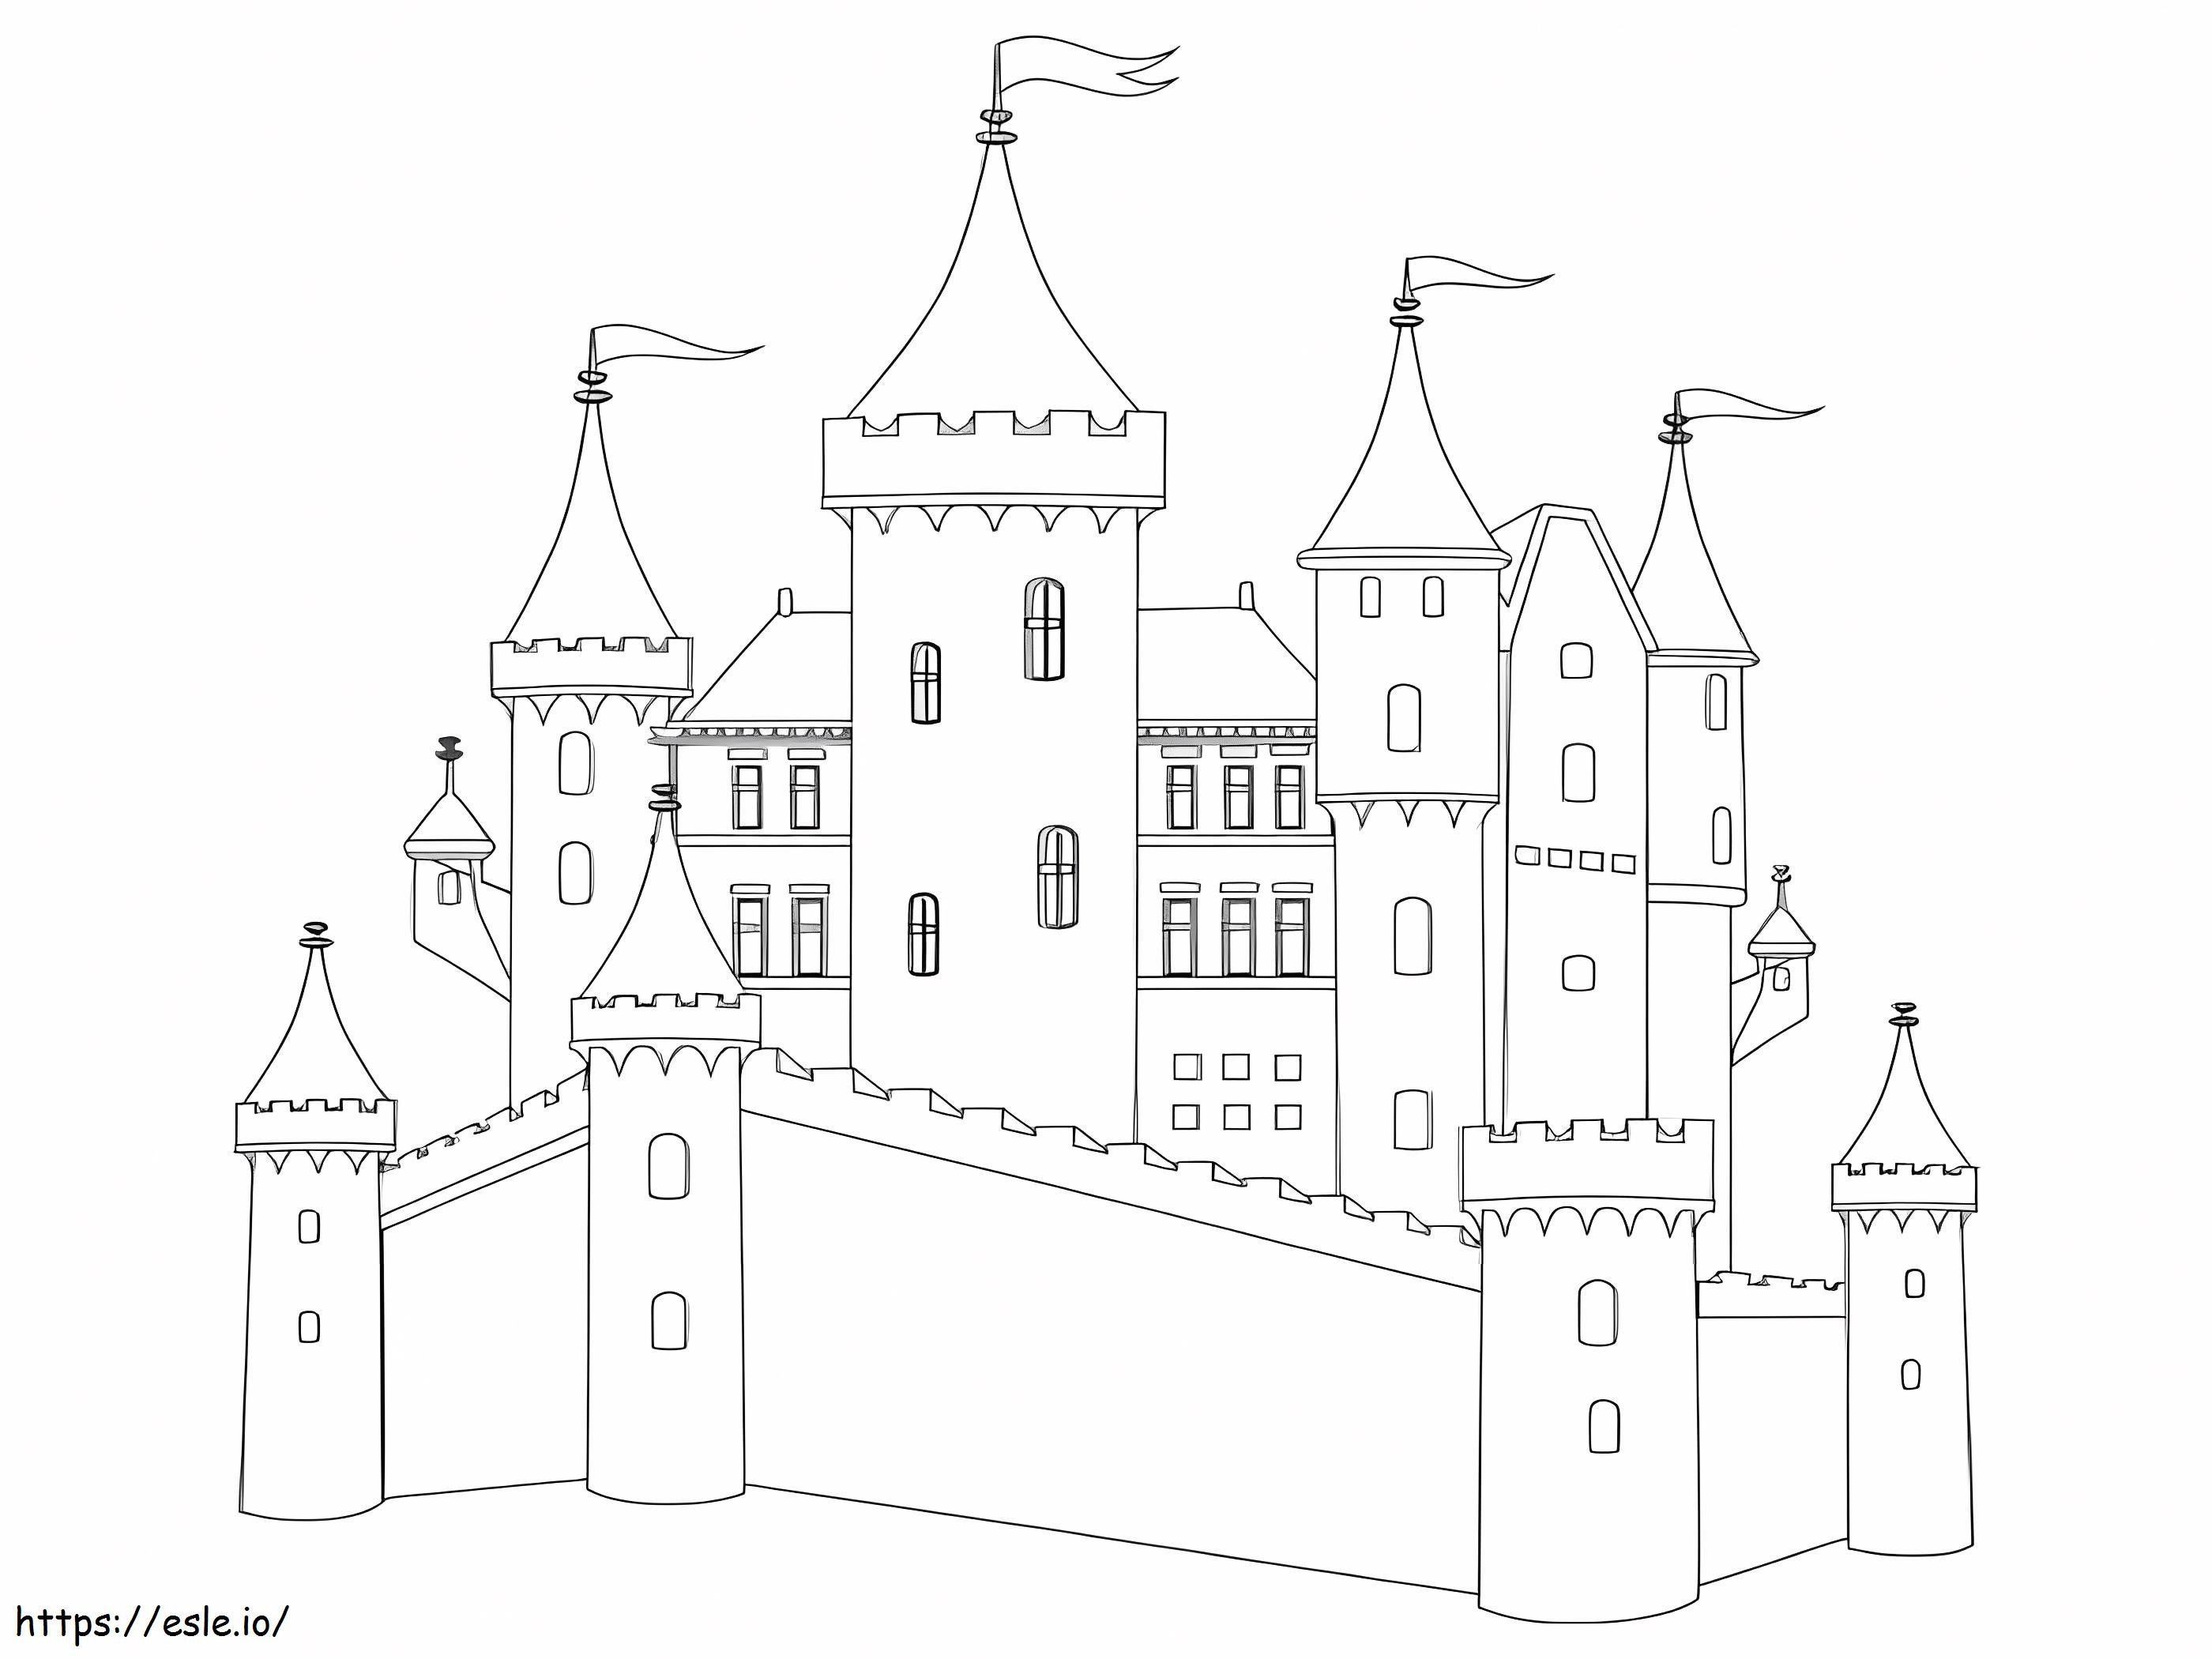 Coloriage Château impressionnant à imprimer dessin